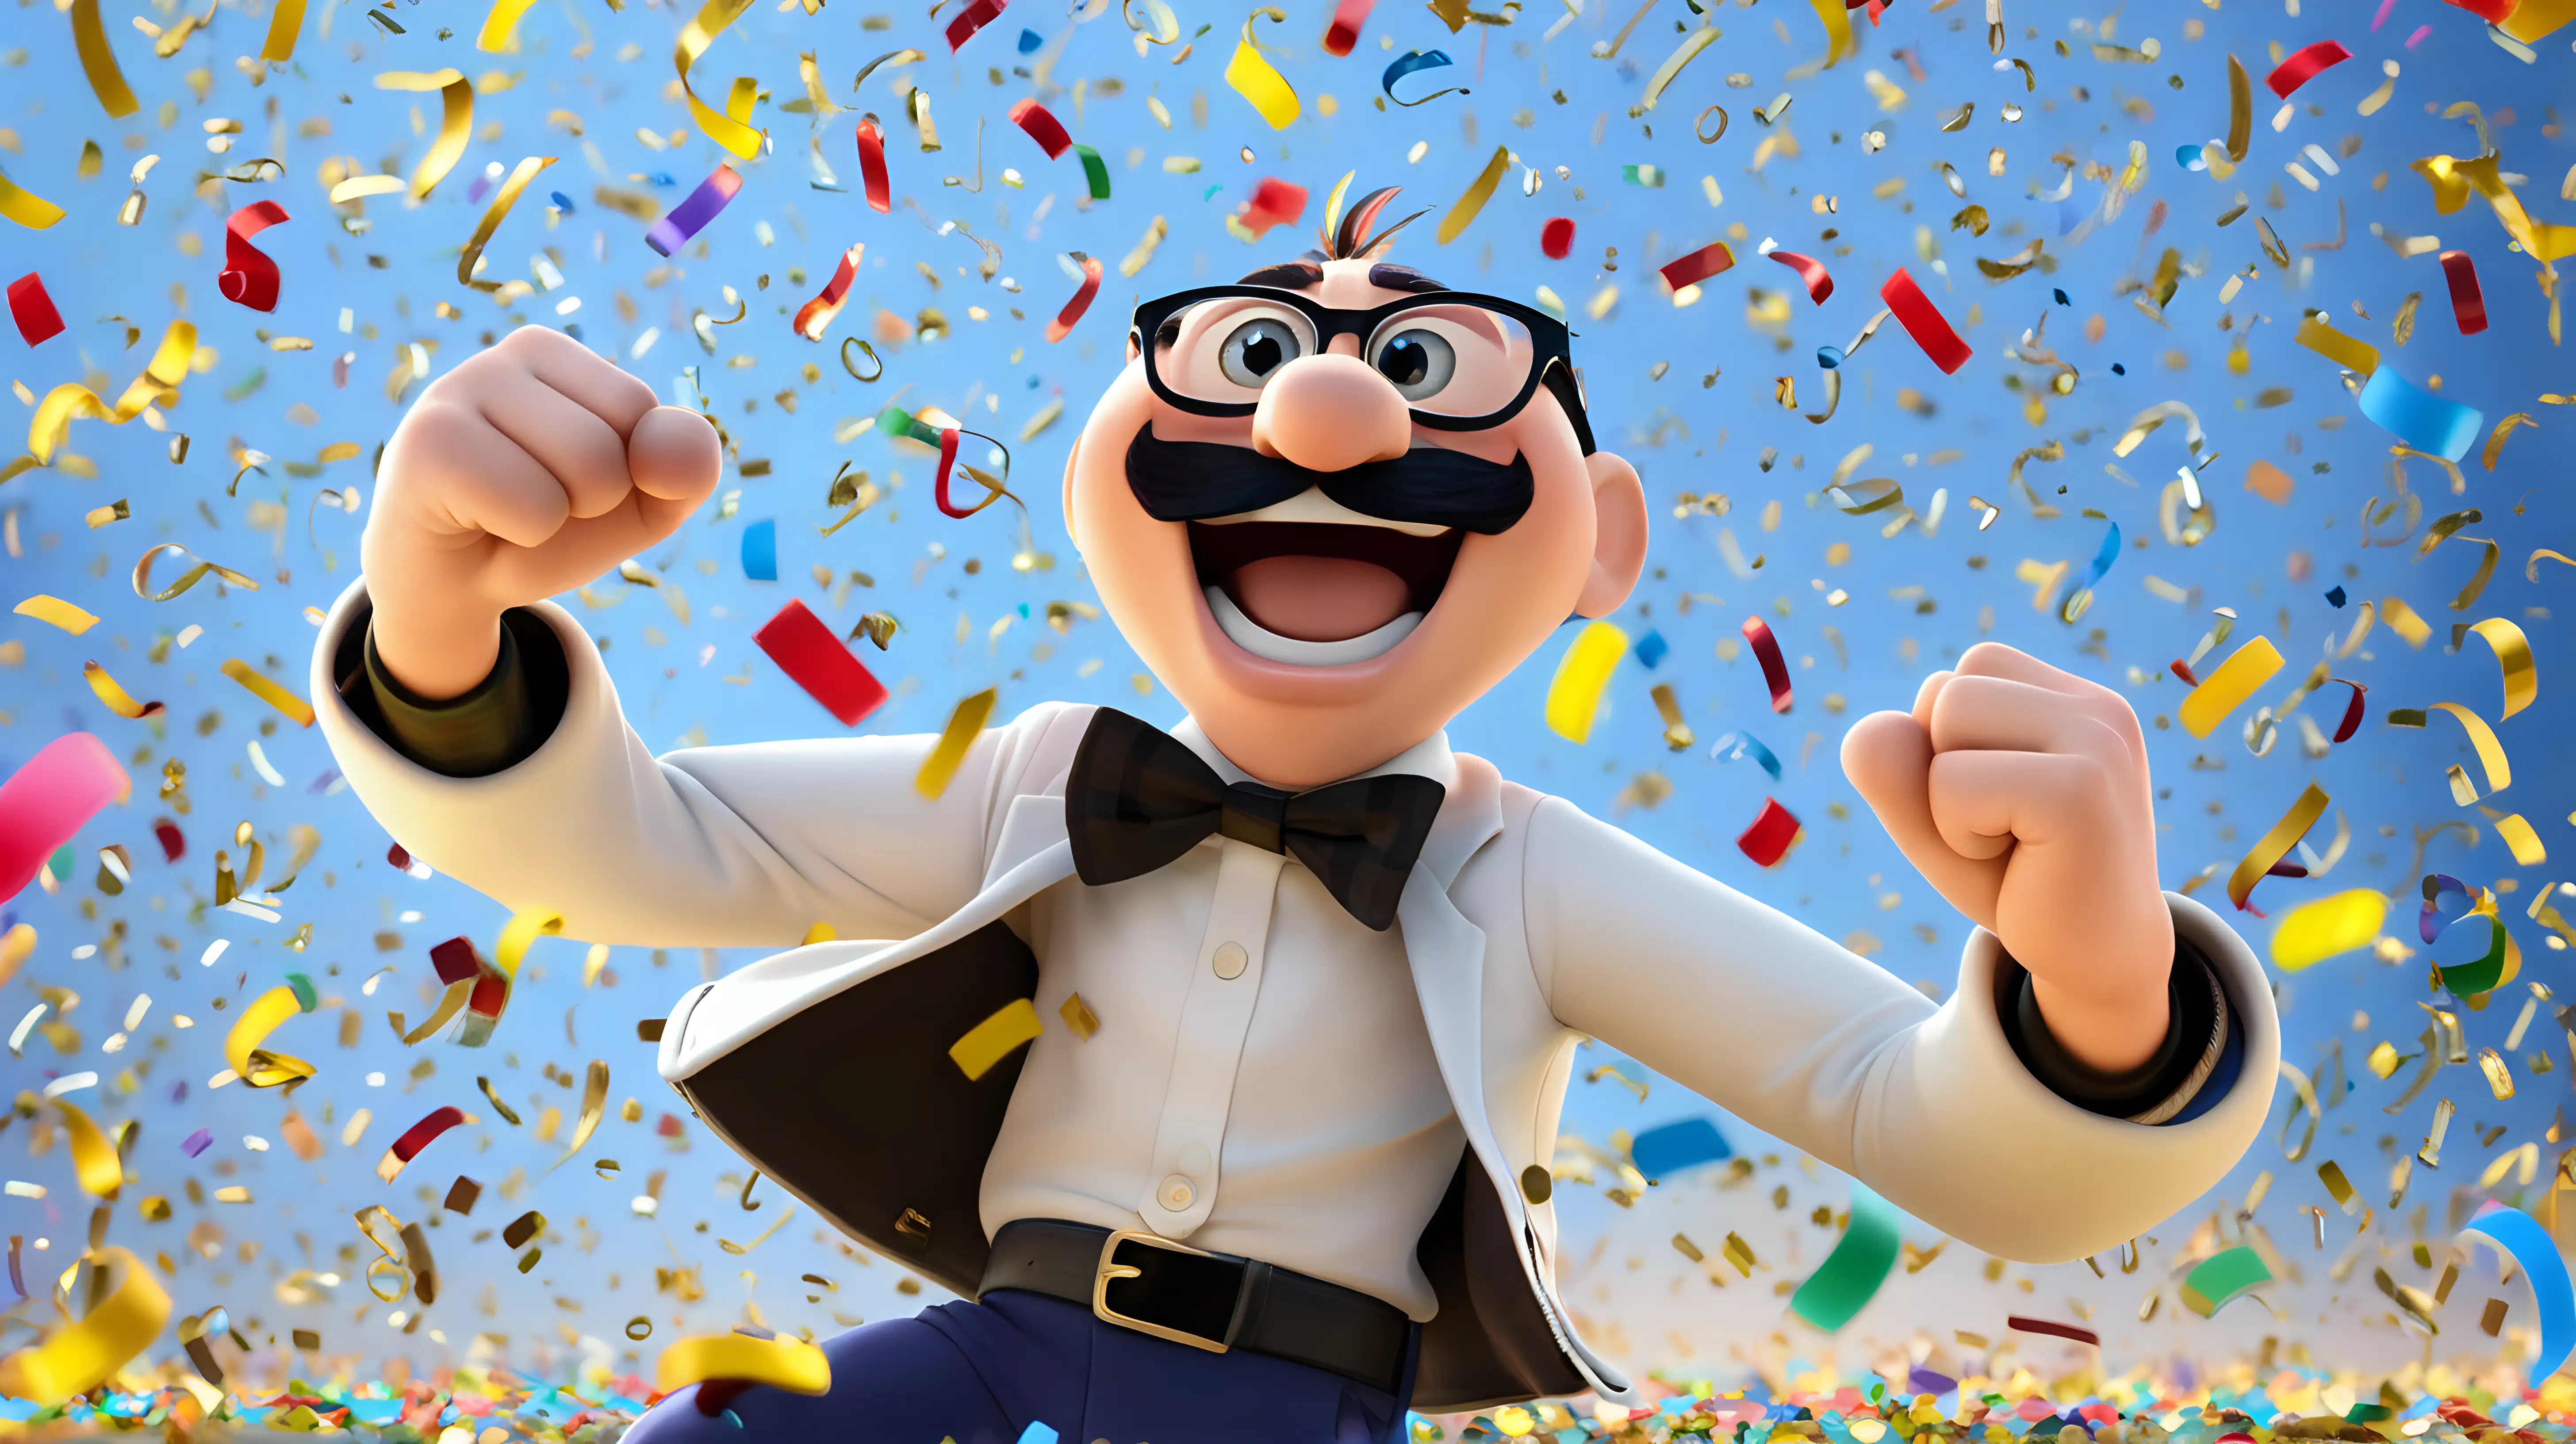 Joyful Animated Character Dancing in Confetti Celebration